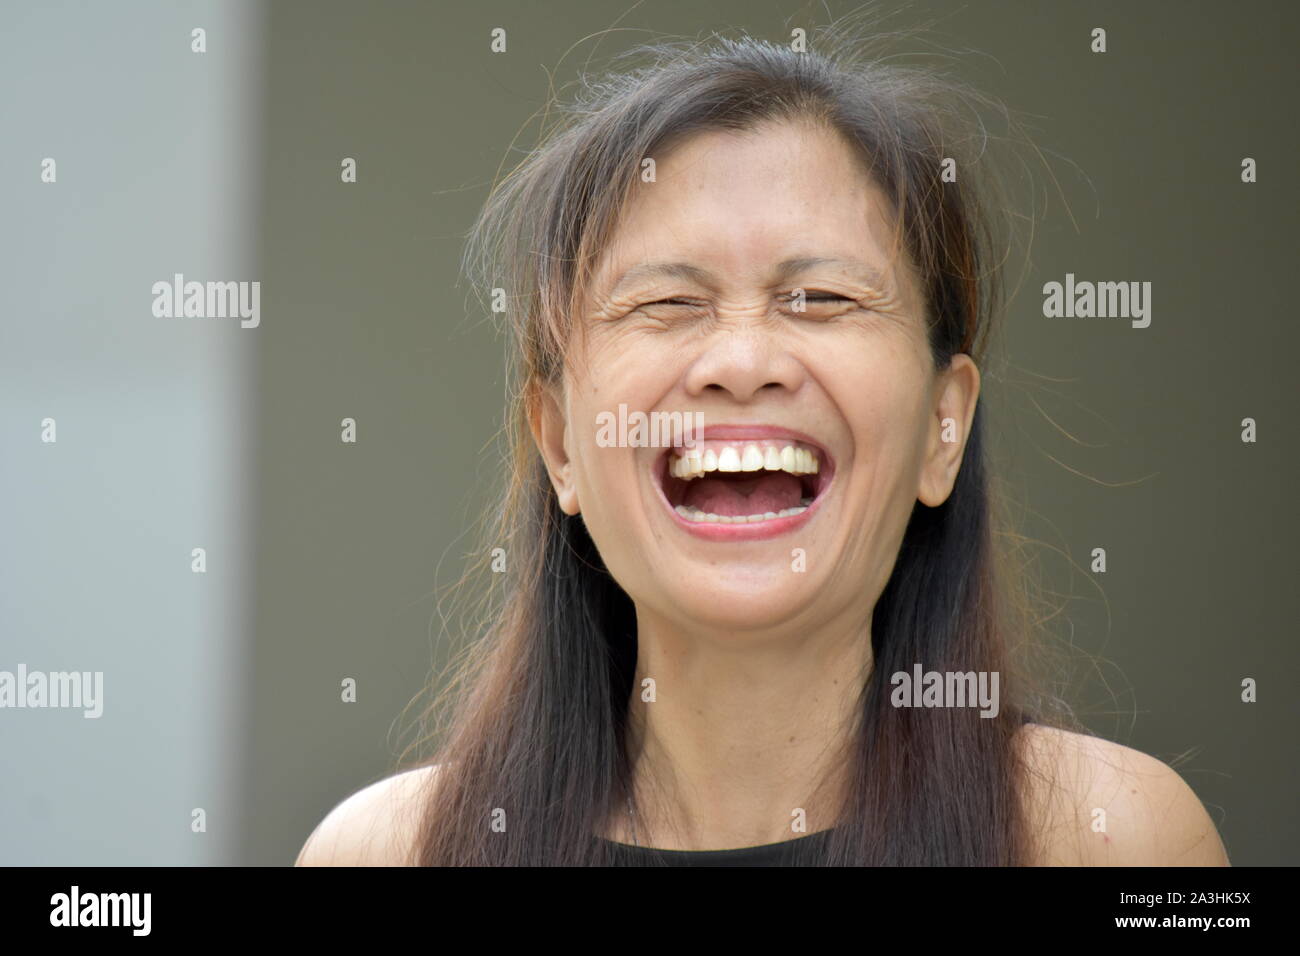 A Minority Female Senior Laughing Stock Photo